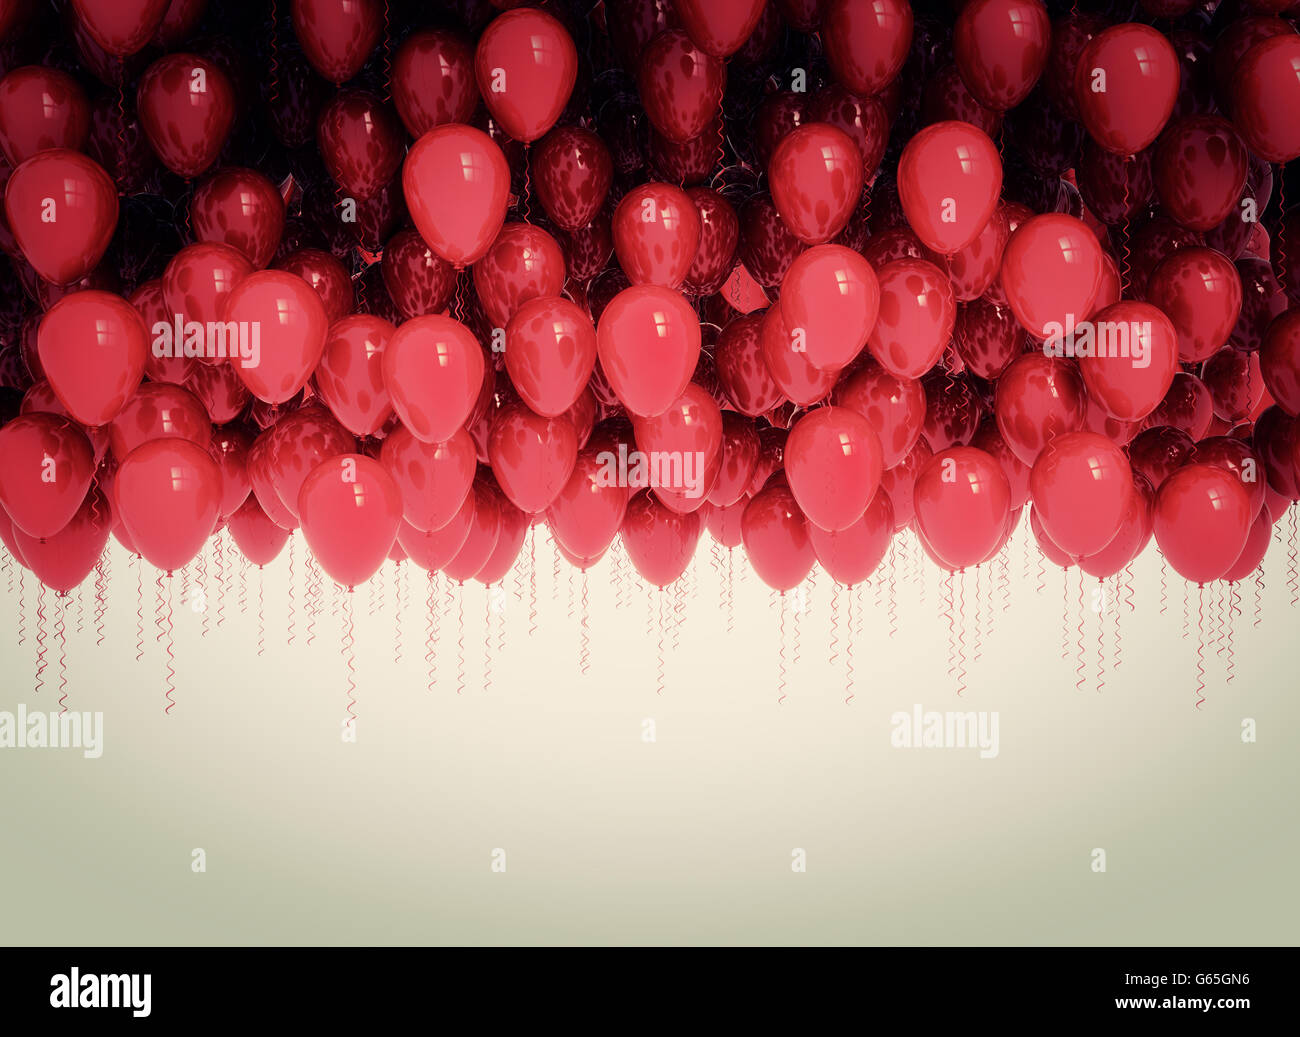 Hintergrund des roten Ballons Retro-look Stockfoto